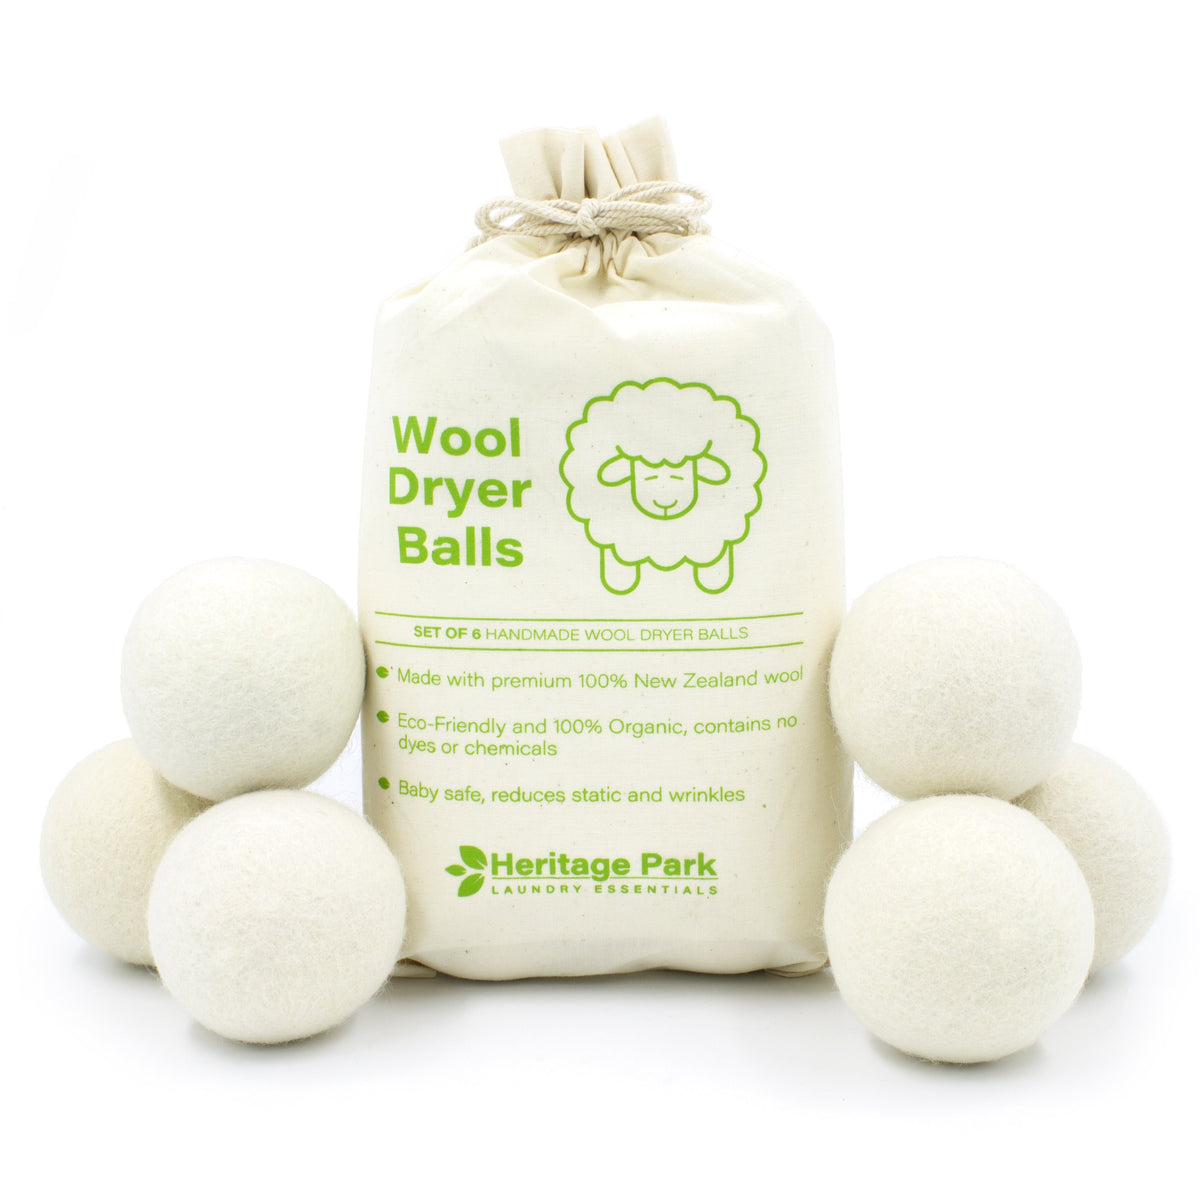  Mulberry Park Silks Heritage Park Wool Dryer Balls - White / 6-Pack